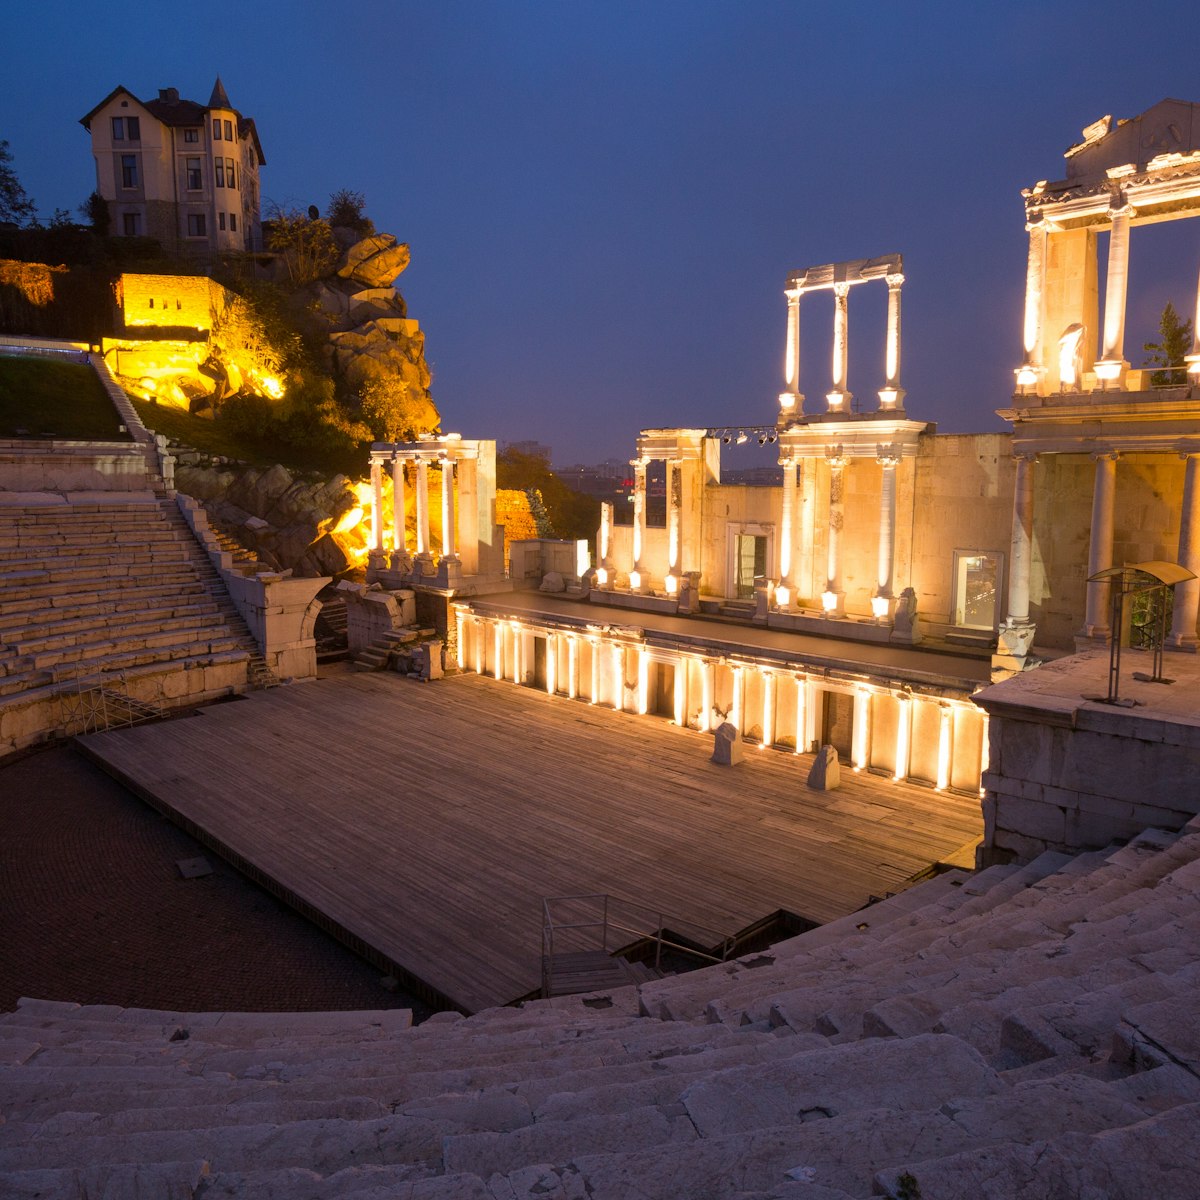 The ancient theatre of Philippopolis.